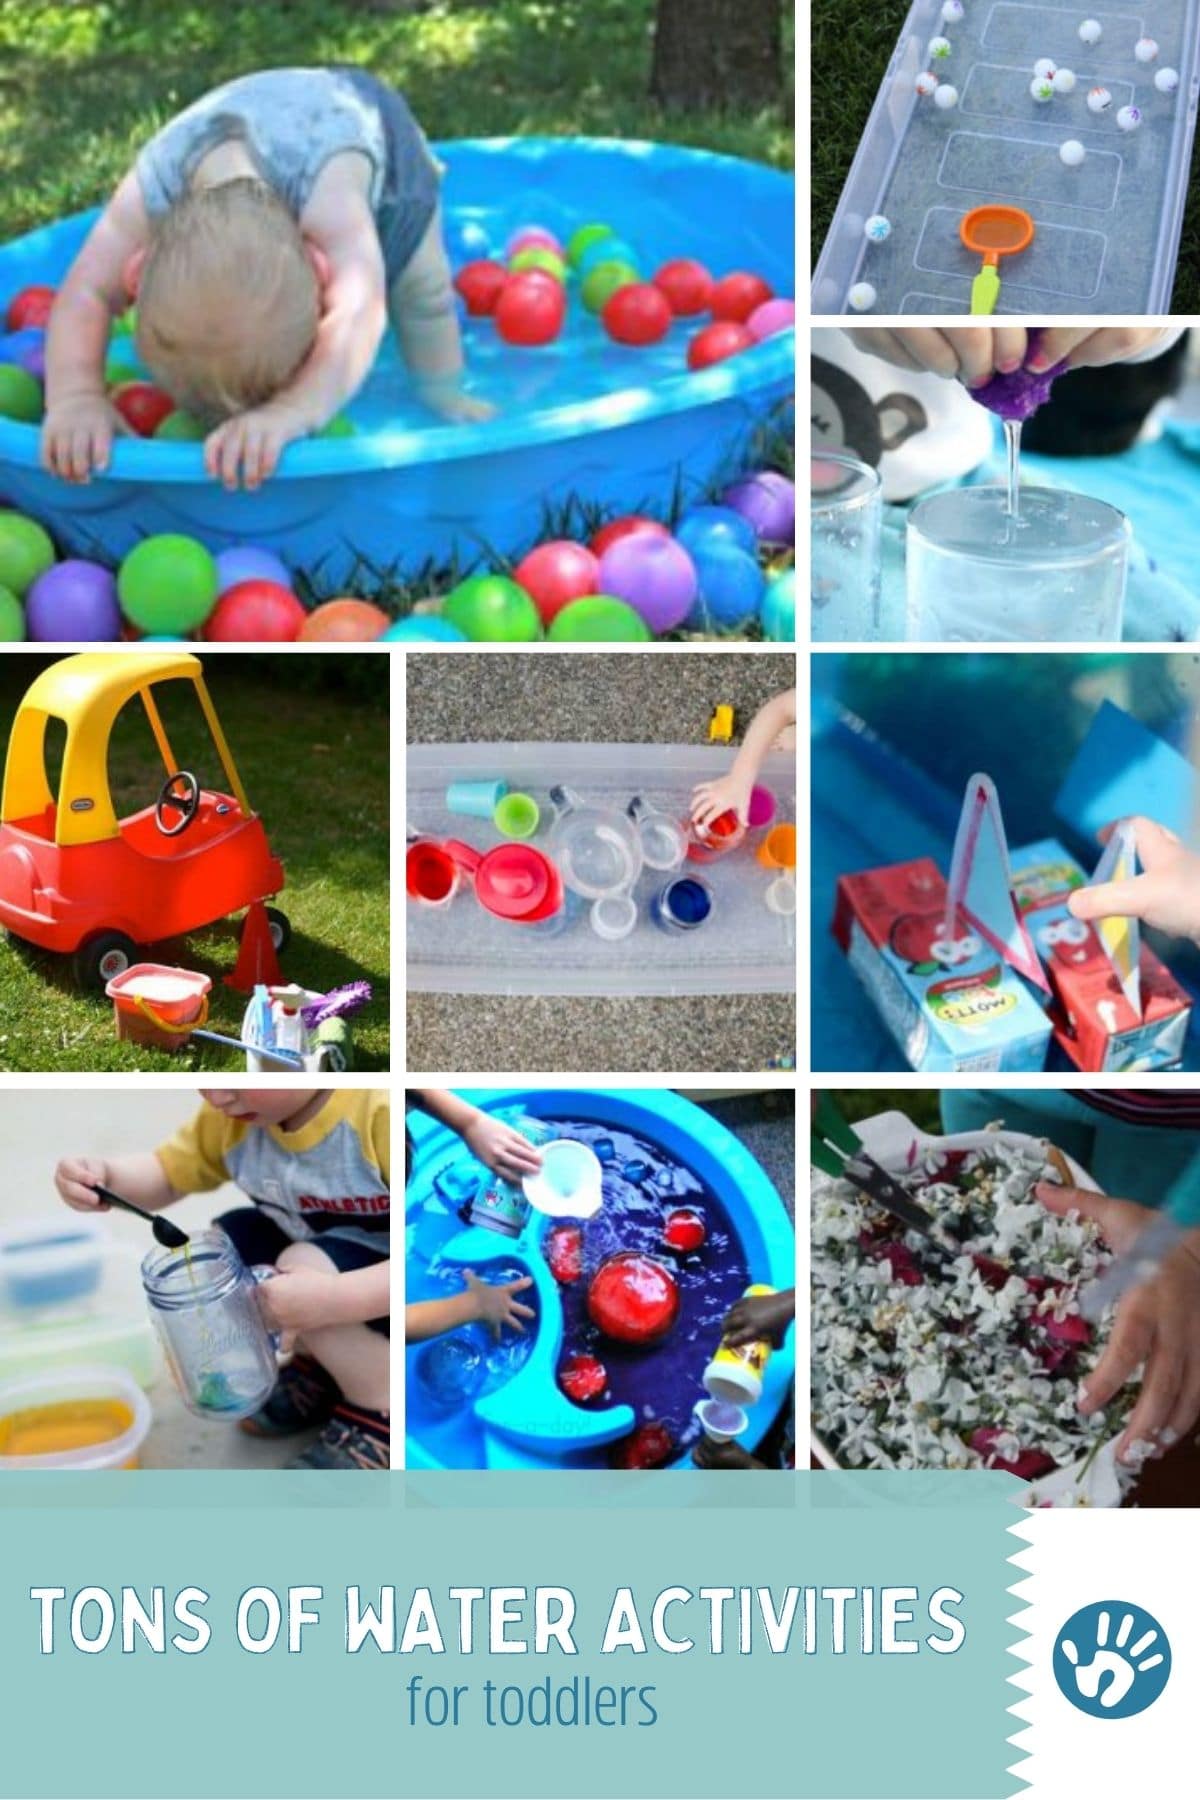 https://handsonaswegrow.com/wp-content/uploads/2022/03/tons_of_water_activities_for_toddlers_1200x1800_feature.jpg